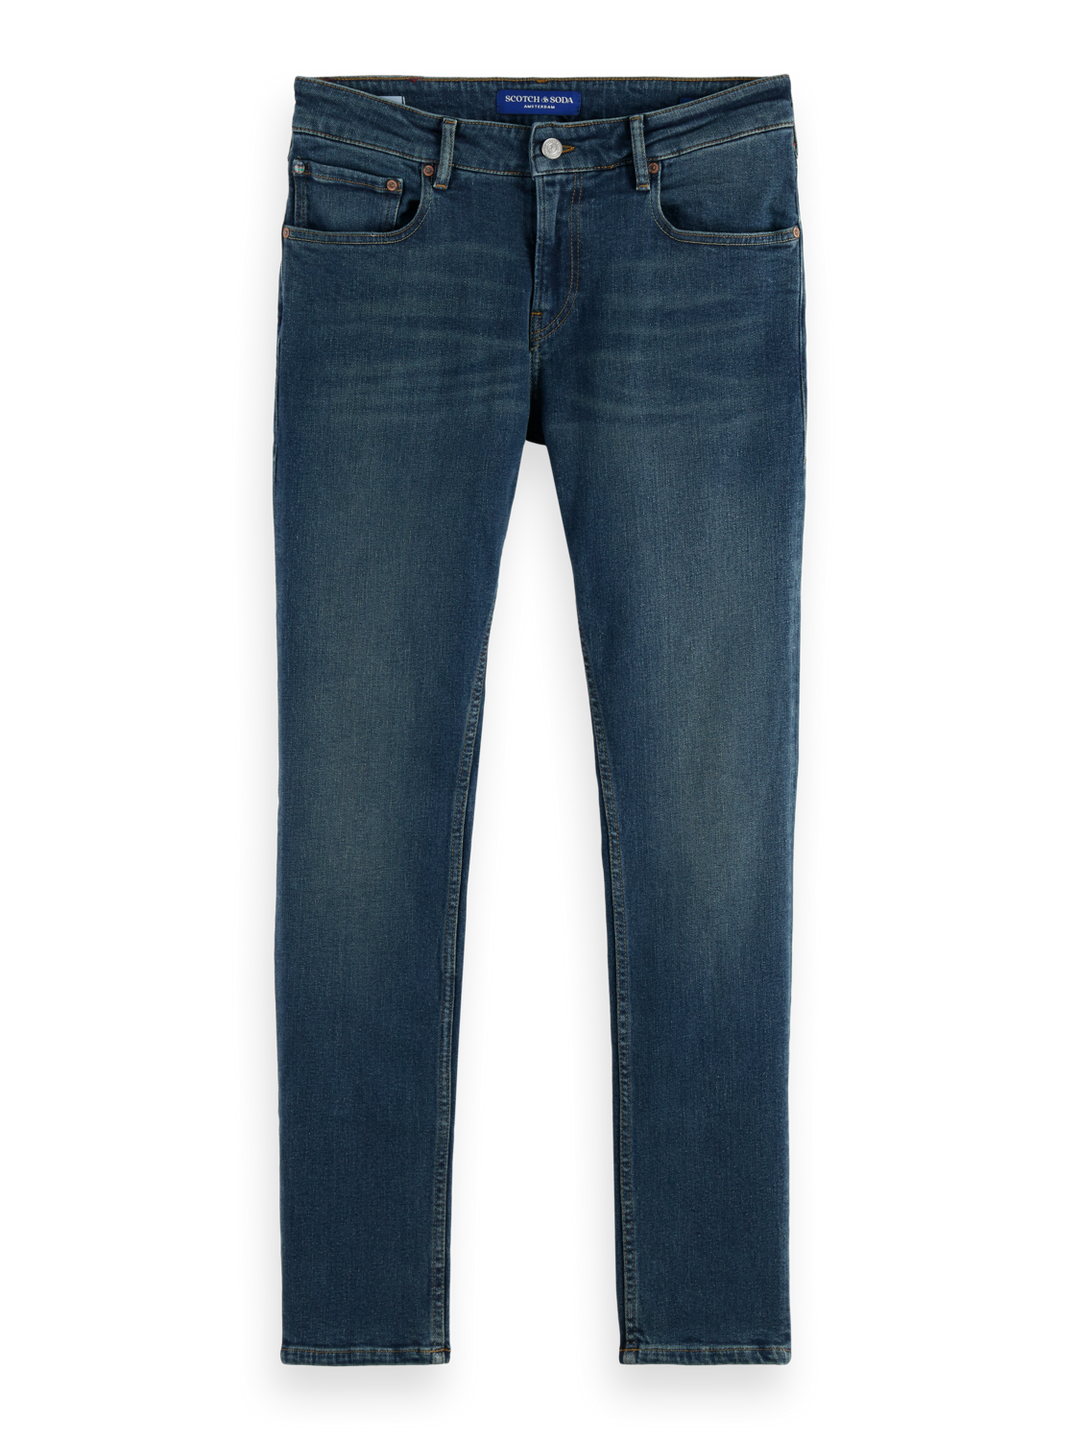 Skim Skinny Fit Jeans in Universal Dark | Buster McGee